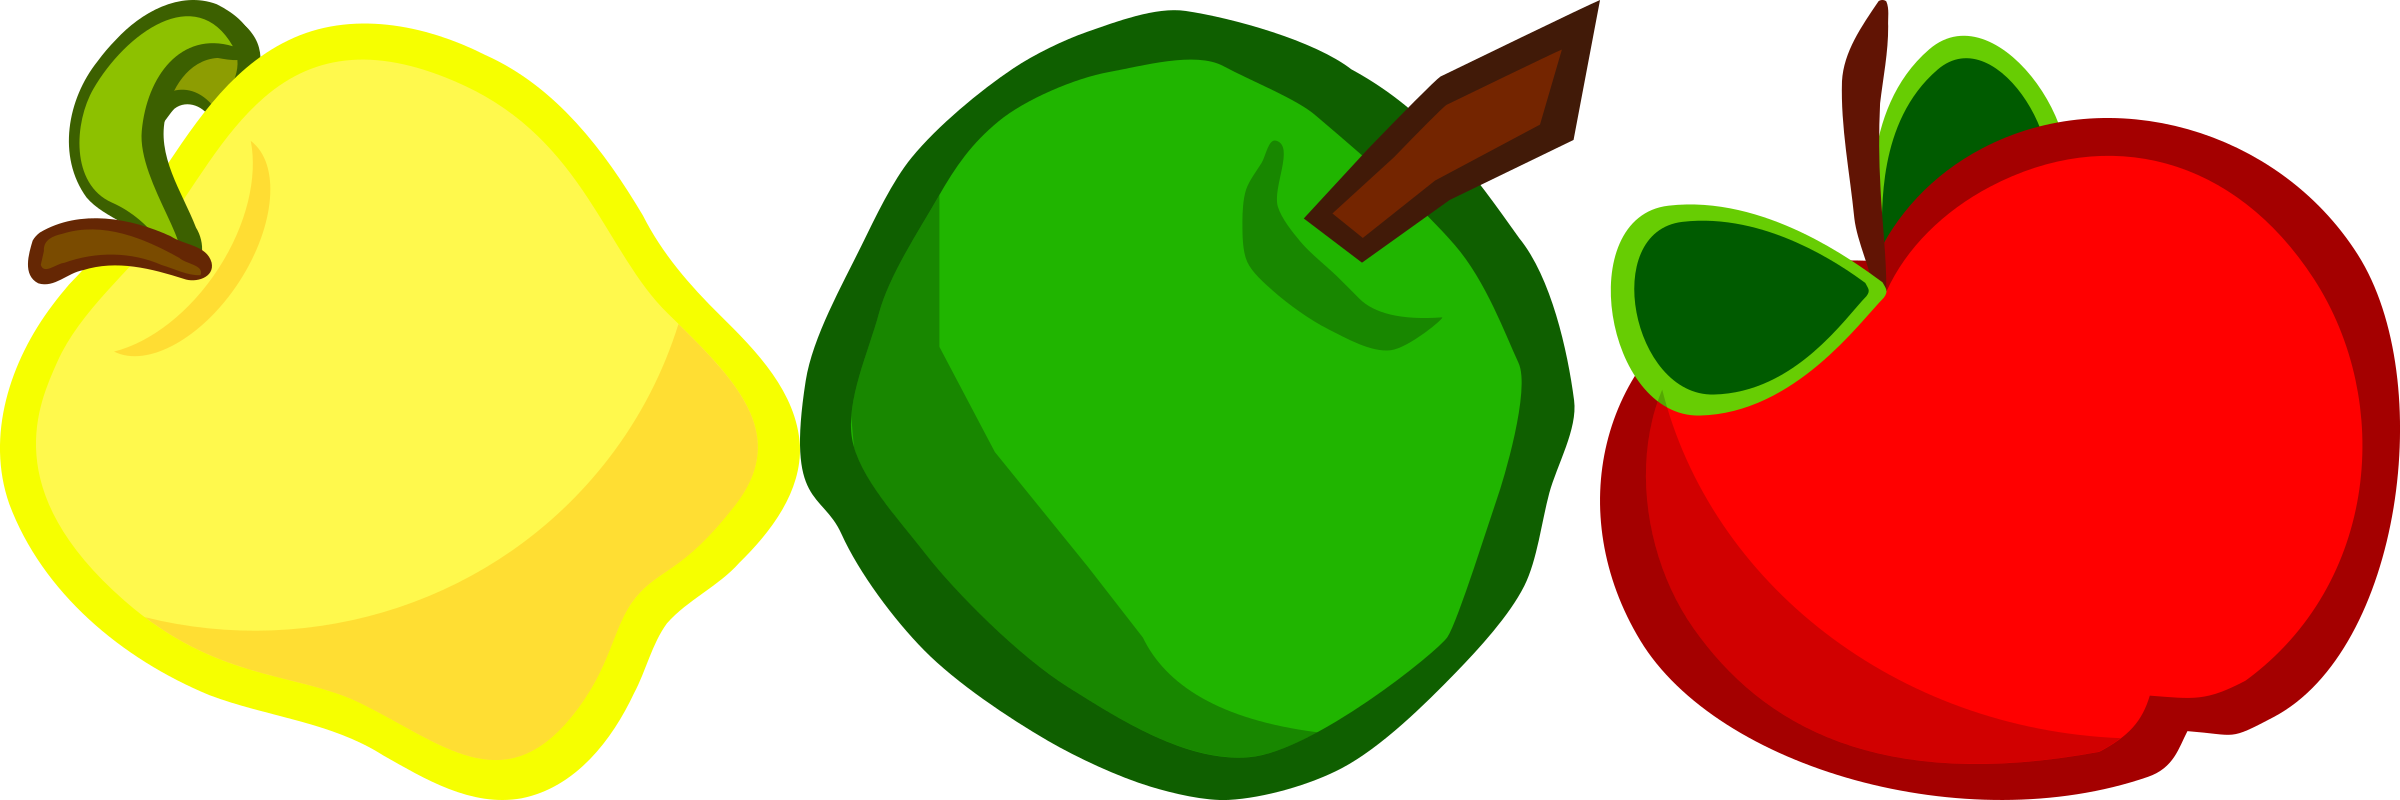 clipart banner apple